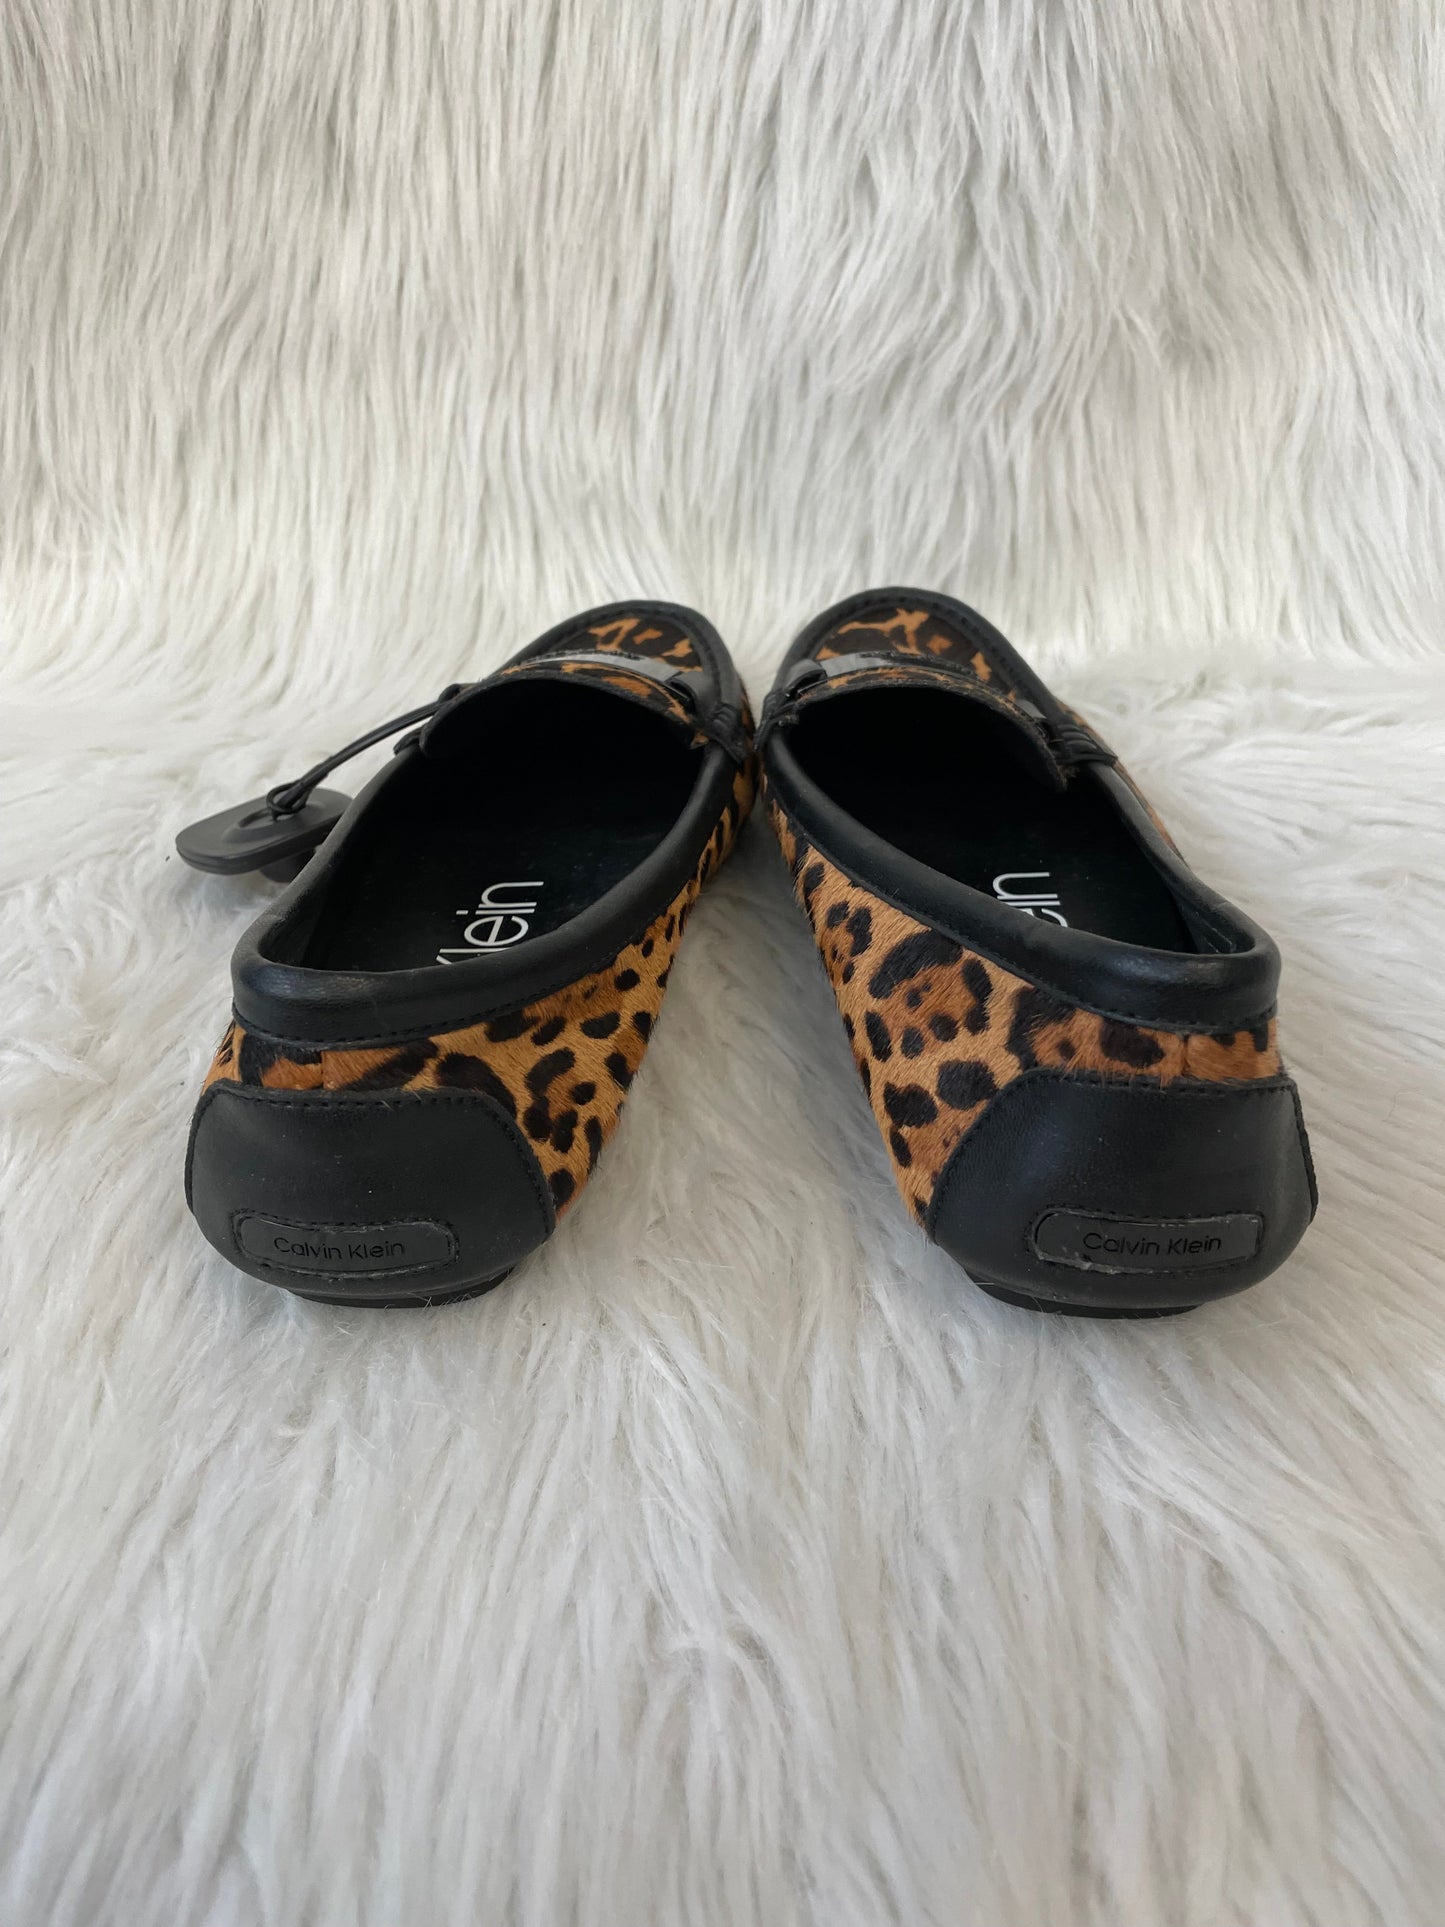 Animal Print Shoes Flats Calvin Klein, Size 10